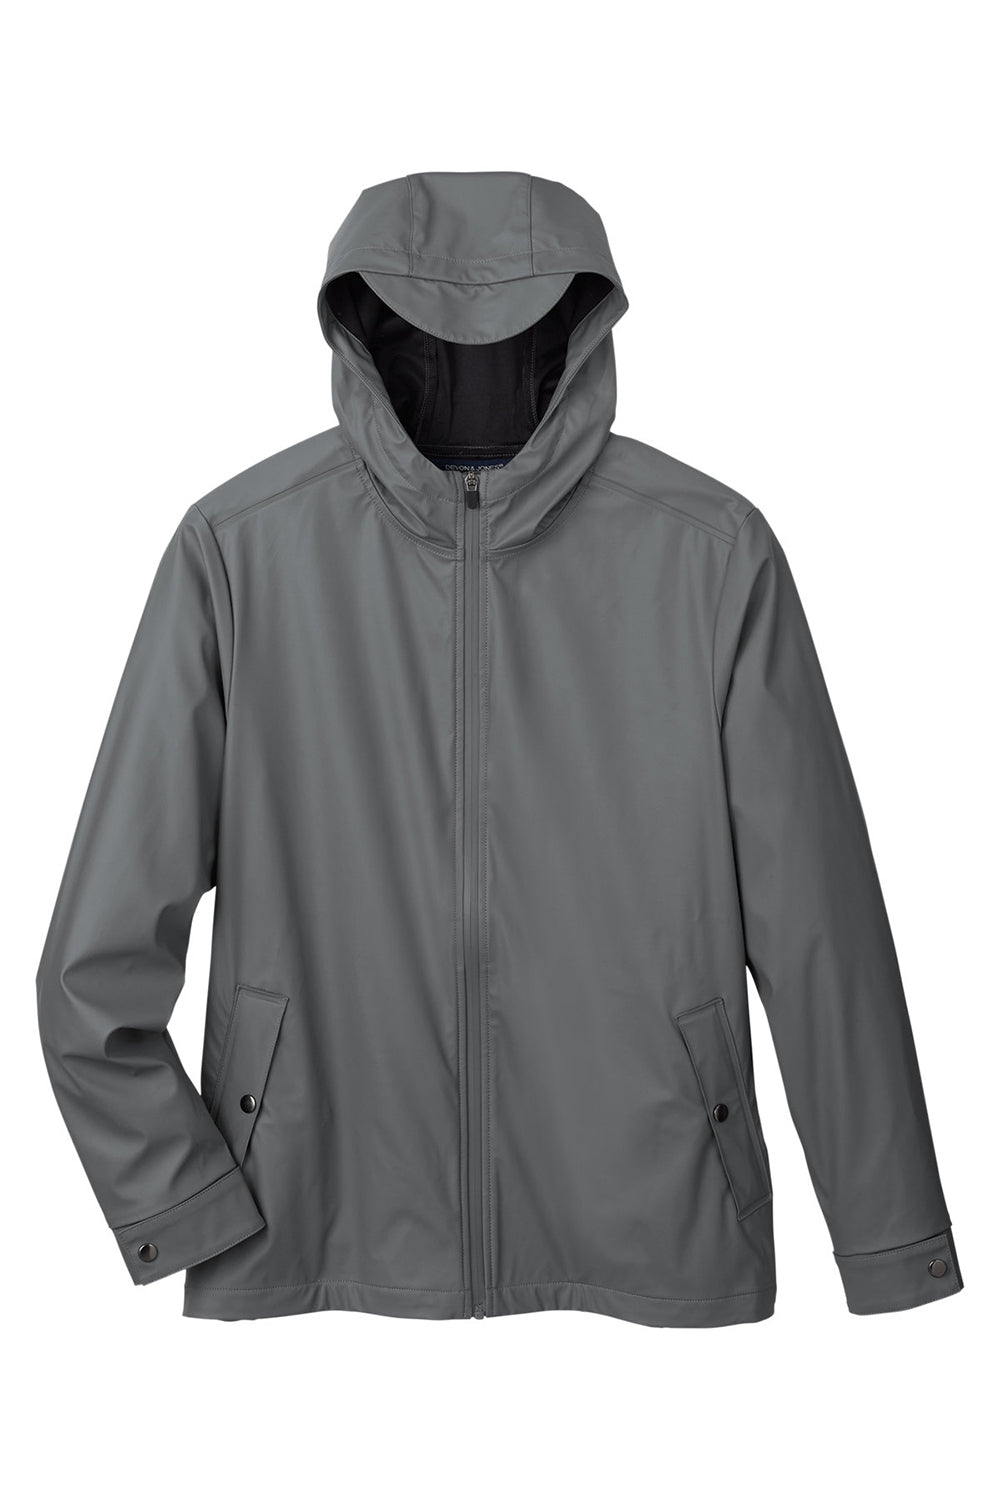 Devon & Jones DG720 Mens New Classics Prescott Full Zip Hooded Rain Jacket Graphite Grey Flat Front